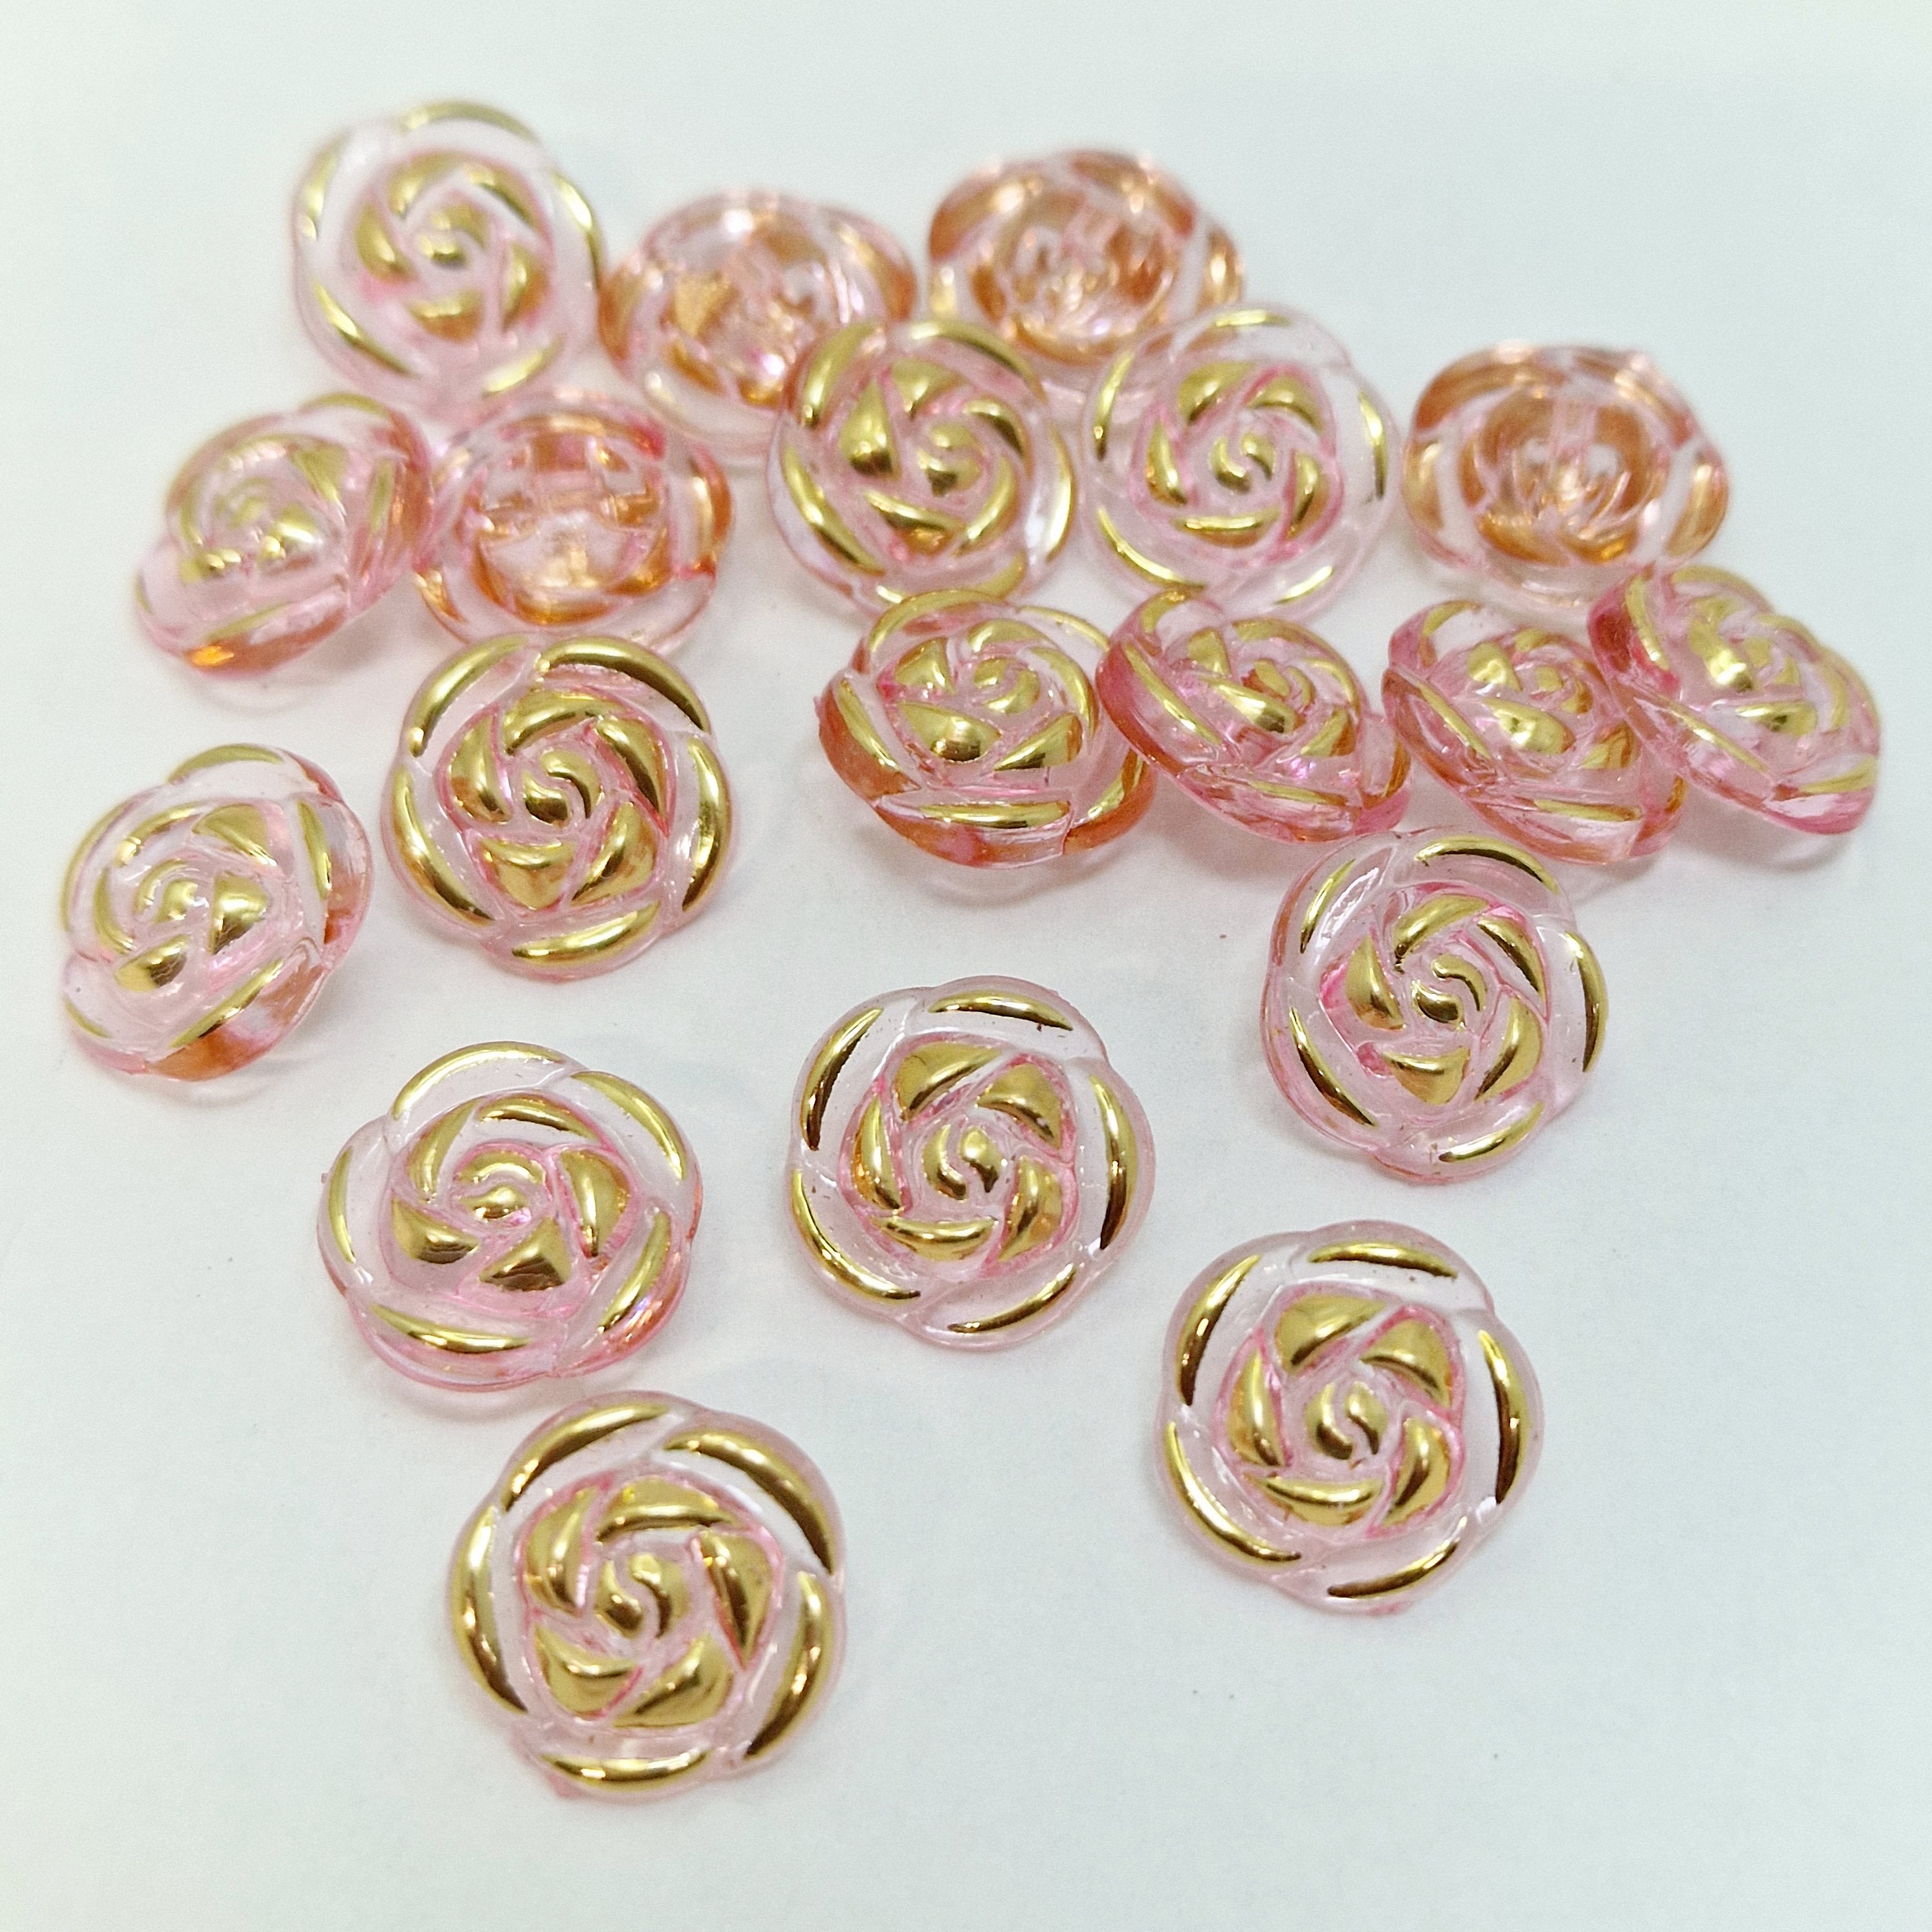 MajorCrafts 40pcs 13mm Light Pink & Gold Rose Flower Shank Resin Buttons